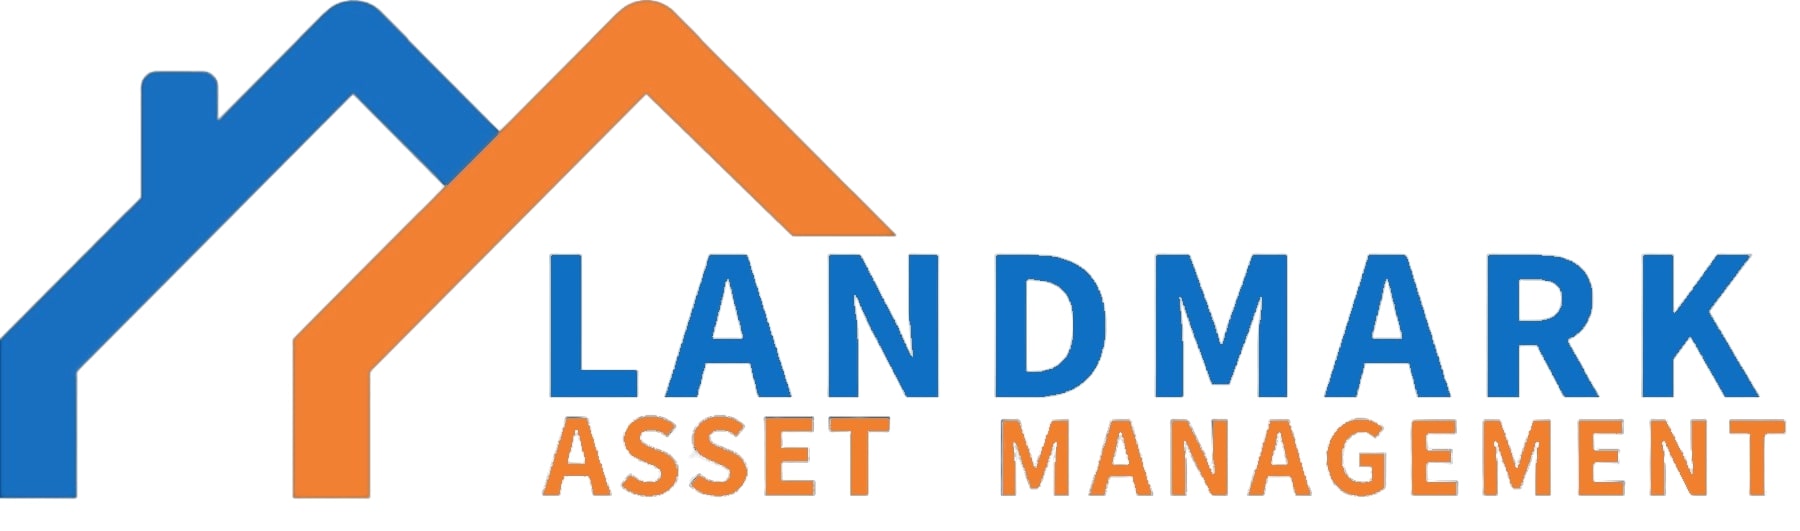 Landmark Asset Management